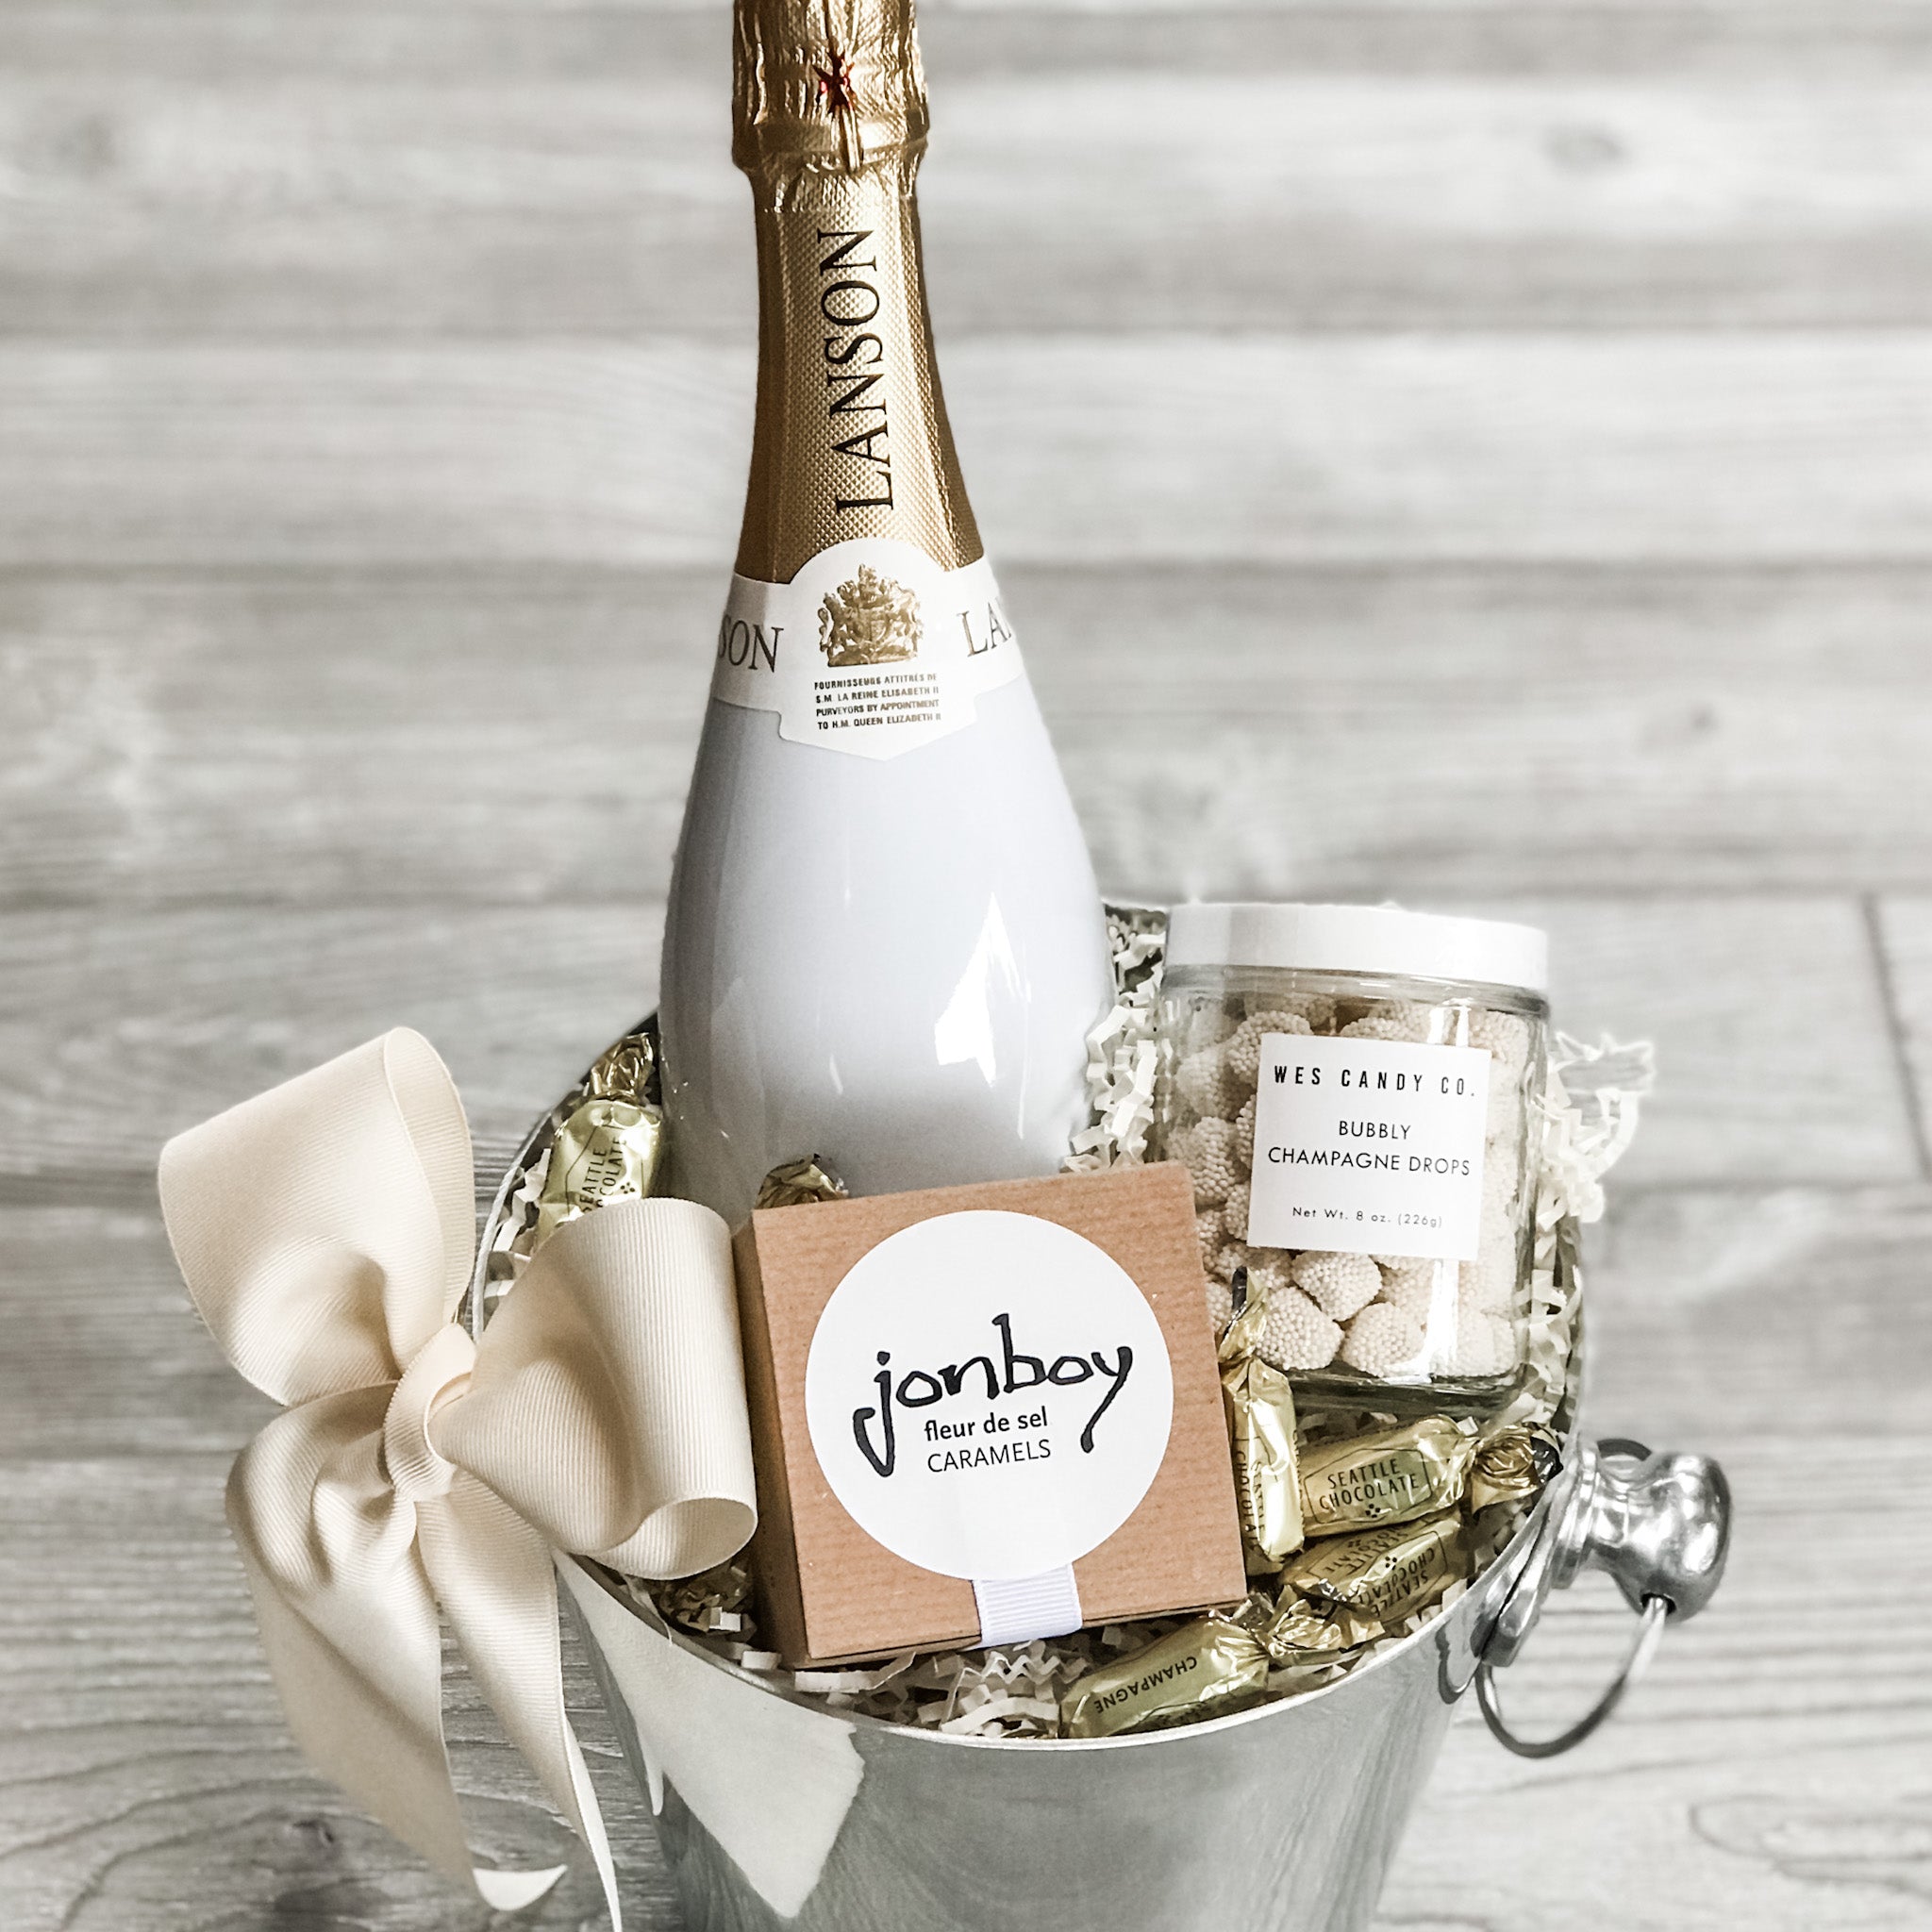 wedding gift basket that includes Lanson champagne, caramel, gummy bears, chocolate, ice bucket